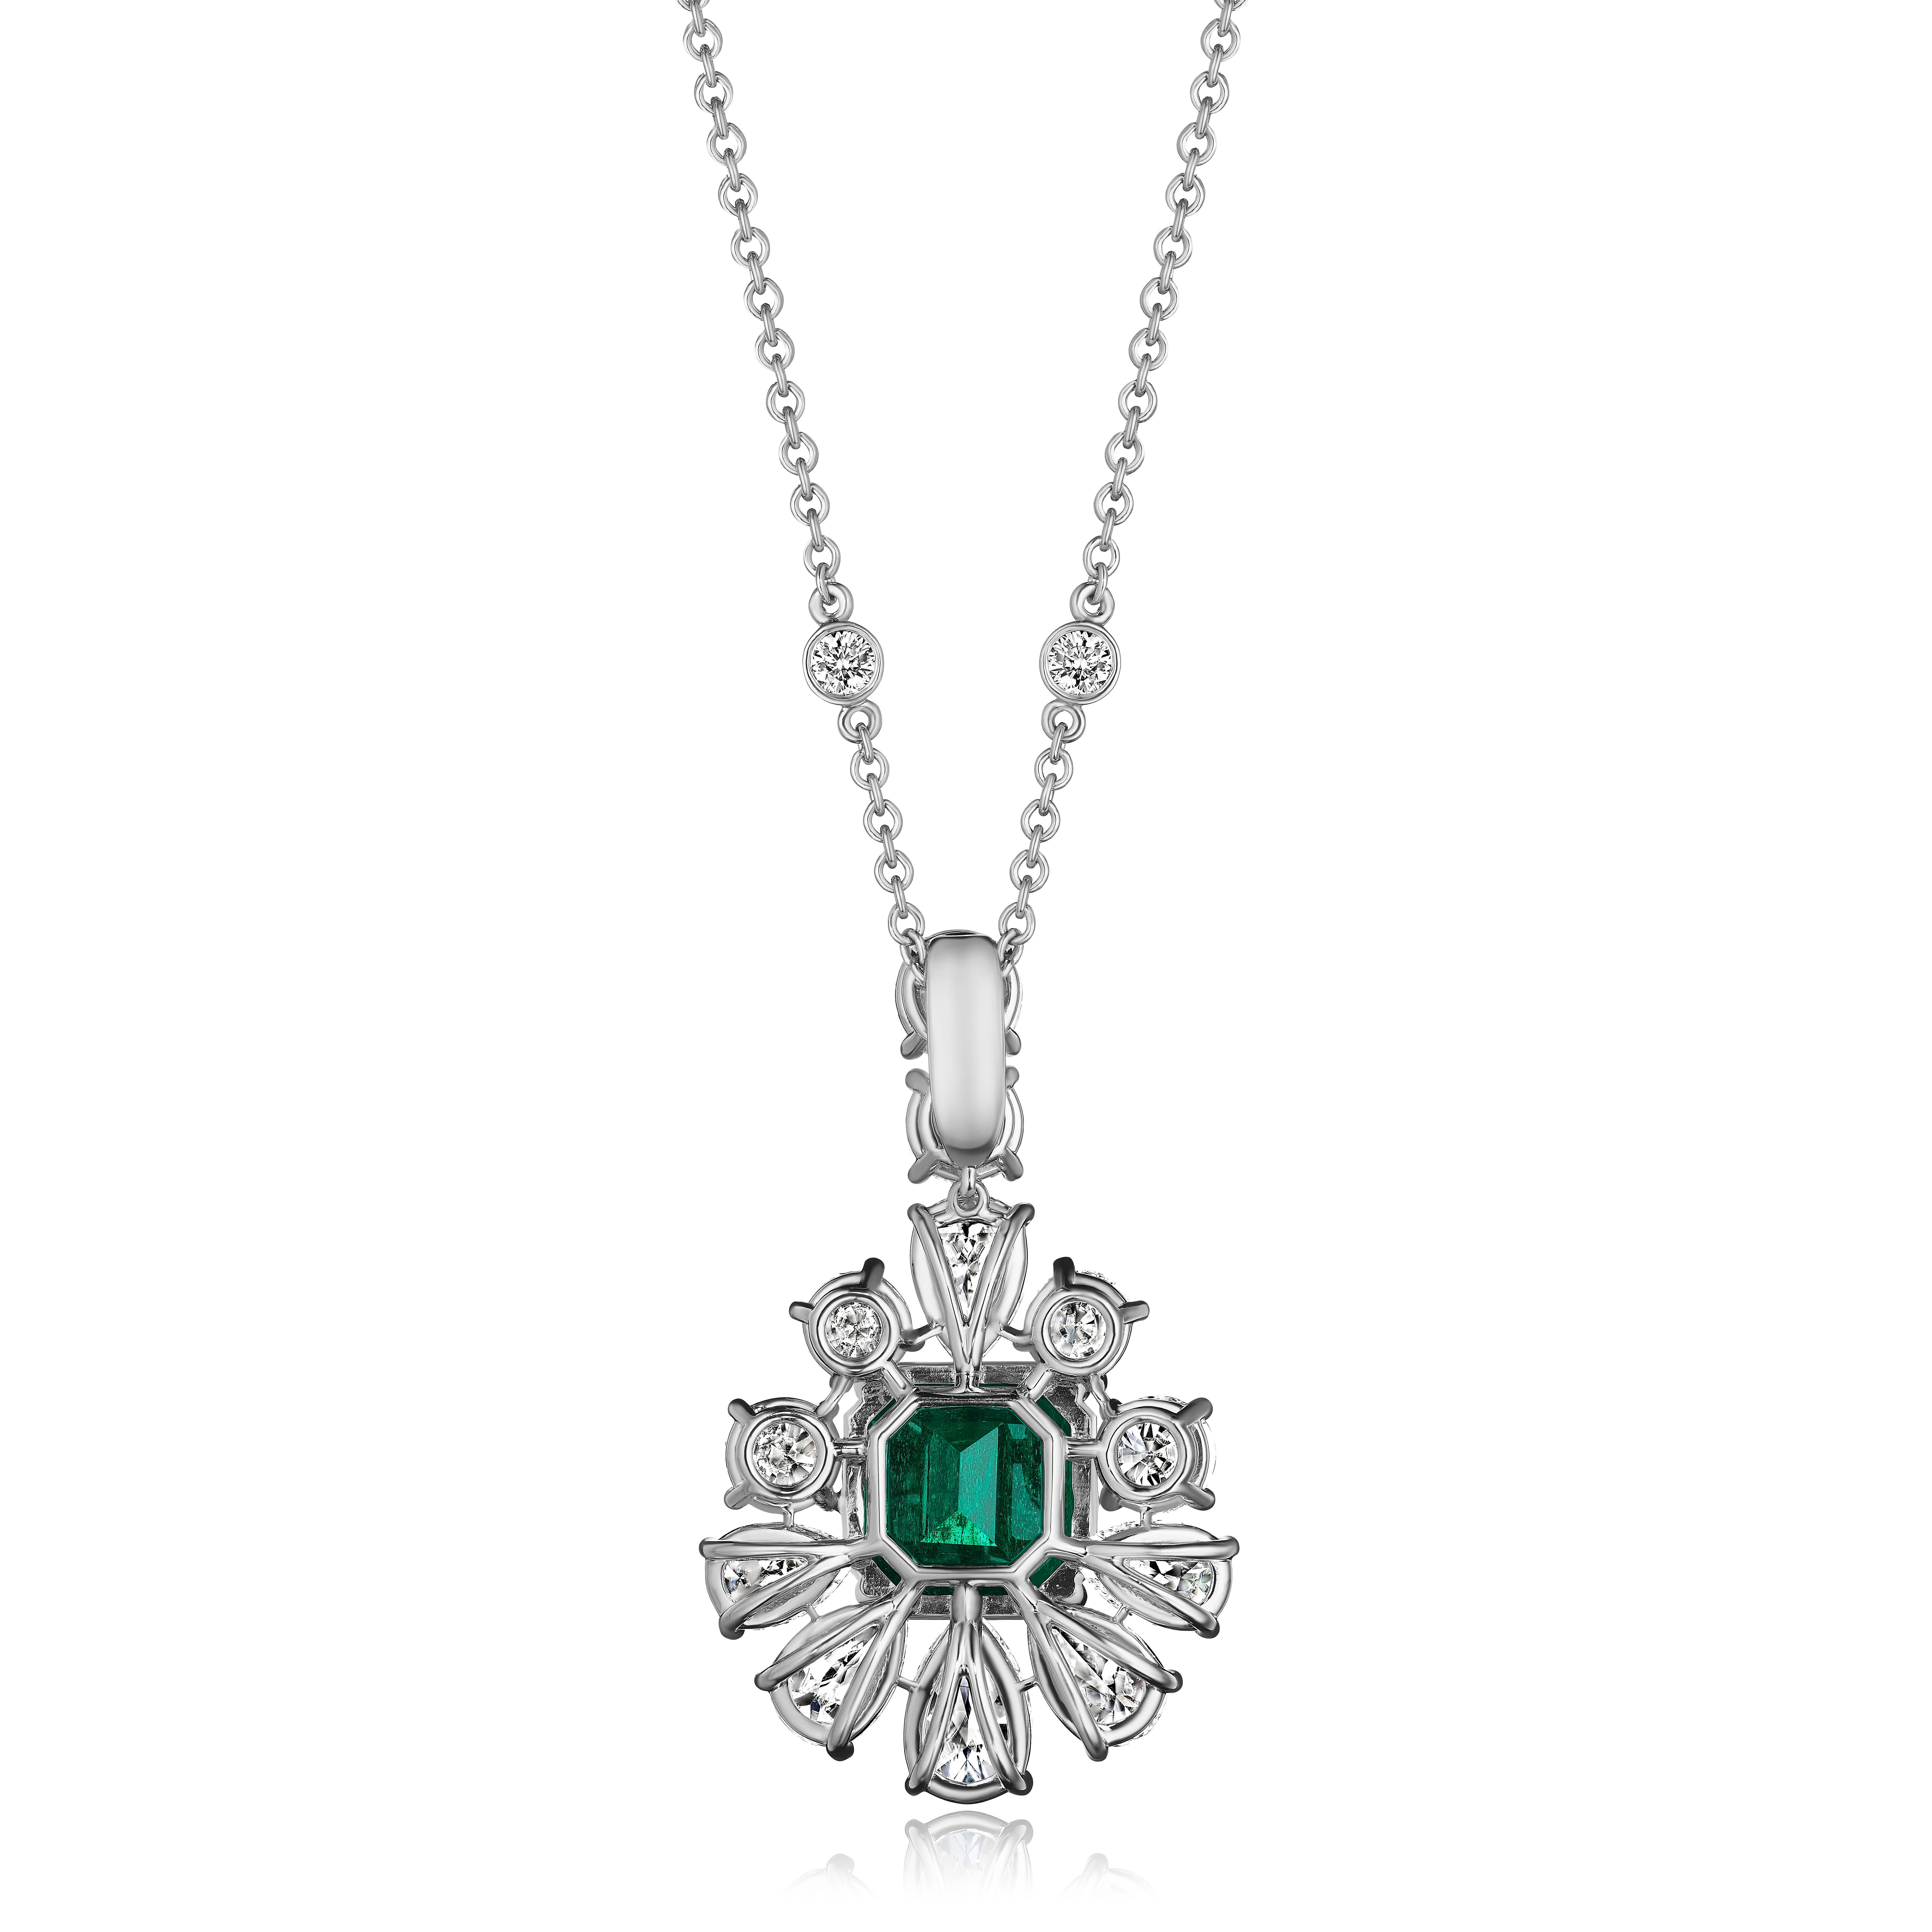 •	Number of Asscher Cut Emeralds: 1
•	Carat Weight: 5.28ct
•	Emerald measurements: 10.37 x 10.35mm

•	Number of Pear Shape Diamonds: 6
•	Carat Weight: 3.63ctw
•	Color: G
•	Clarity: VS2- VVS2

•	Number of Round Diamond: 18
•	Carat Weight: